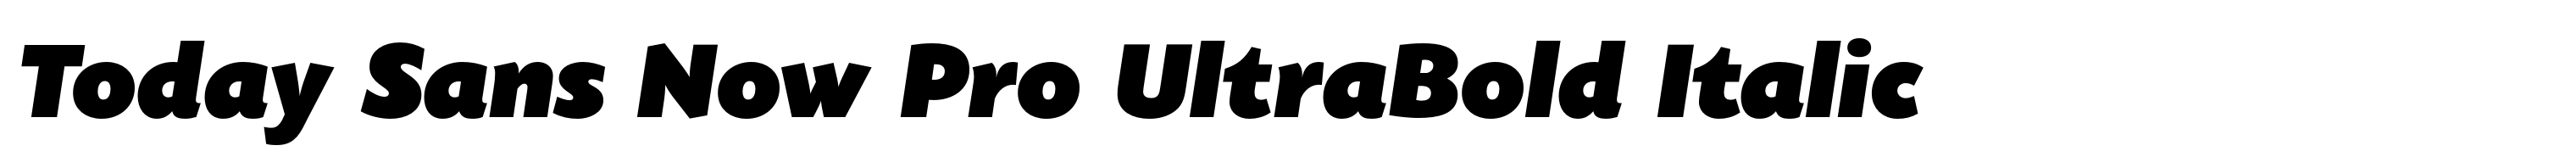 Today Sans Now Pro UltraBold Italic